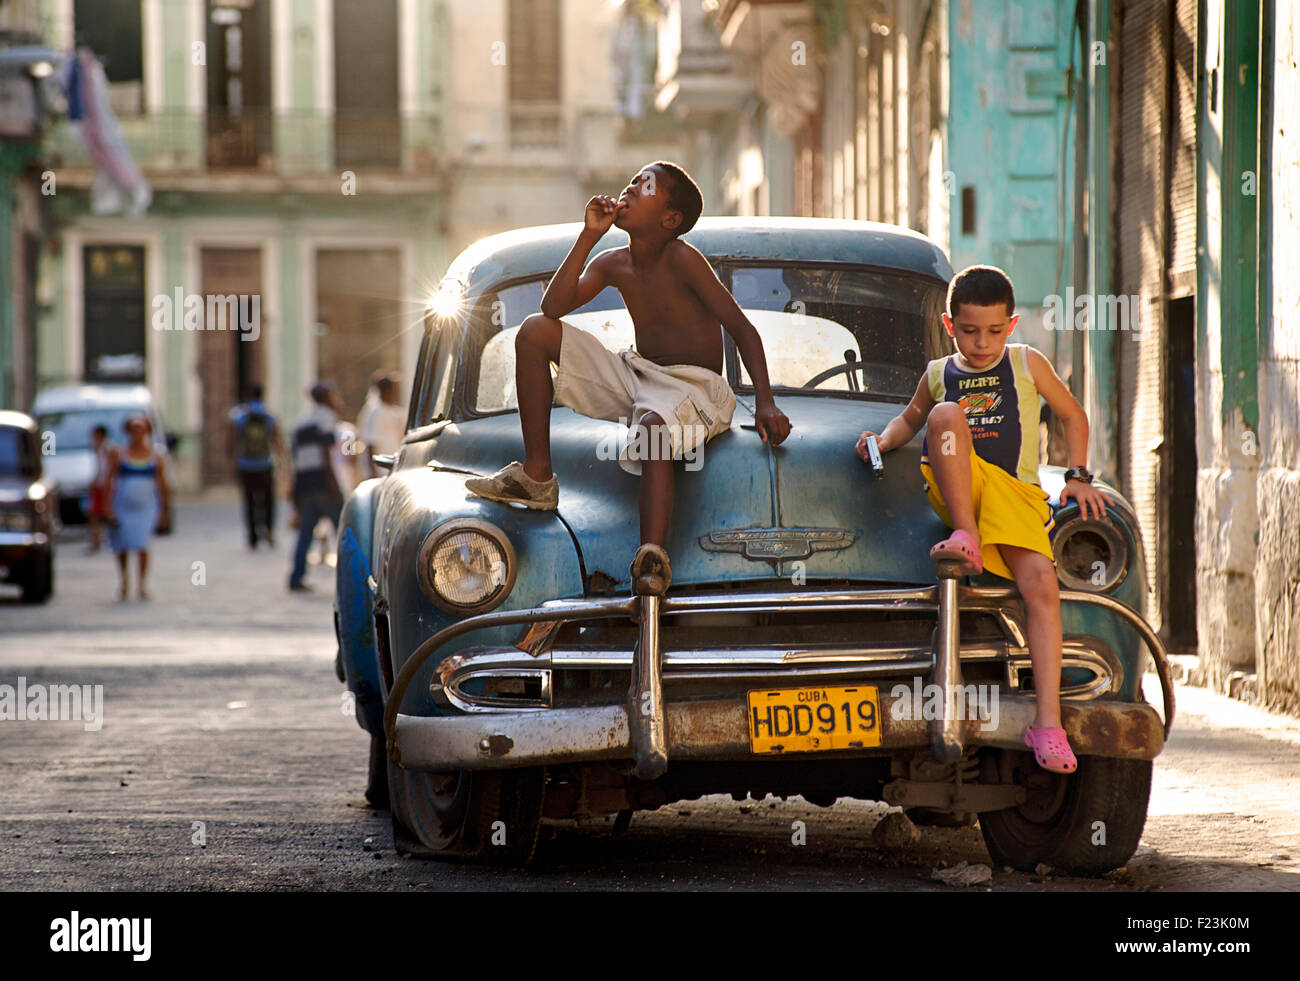 Cuban kids on a classic American car. CHEVROLET. A cultural icon for modern day Cuba. Havana, Cuba Stock Photo